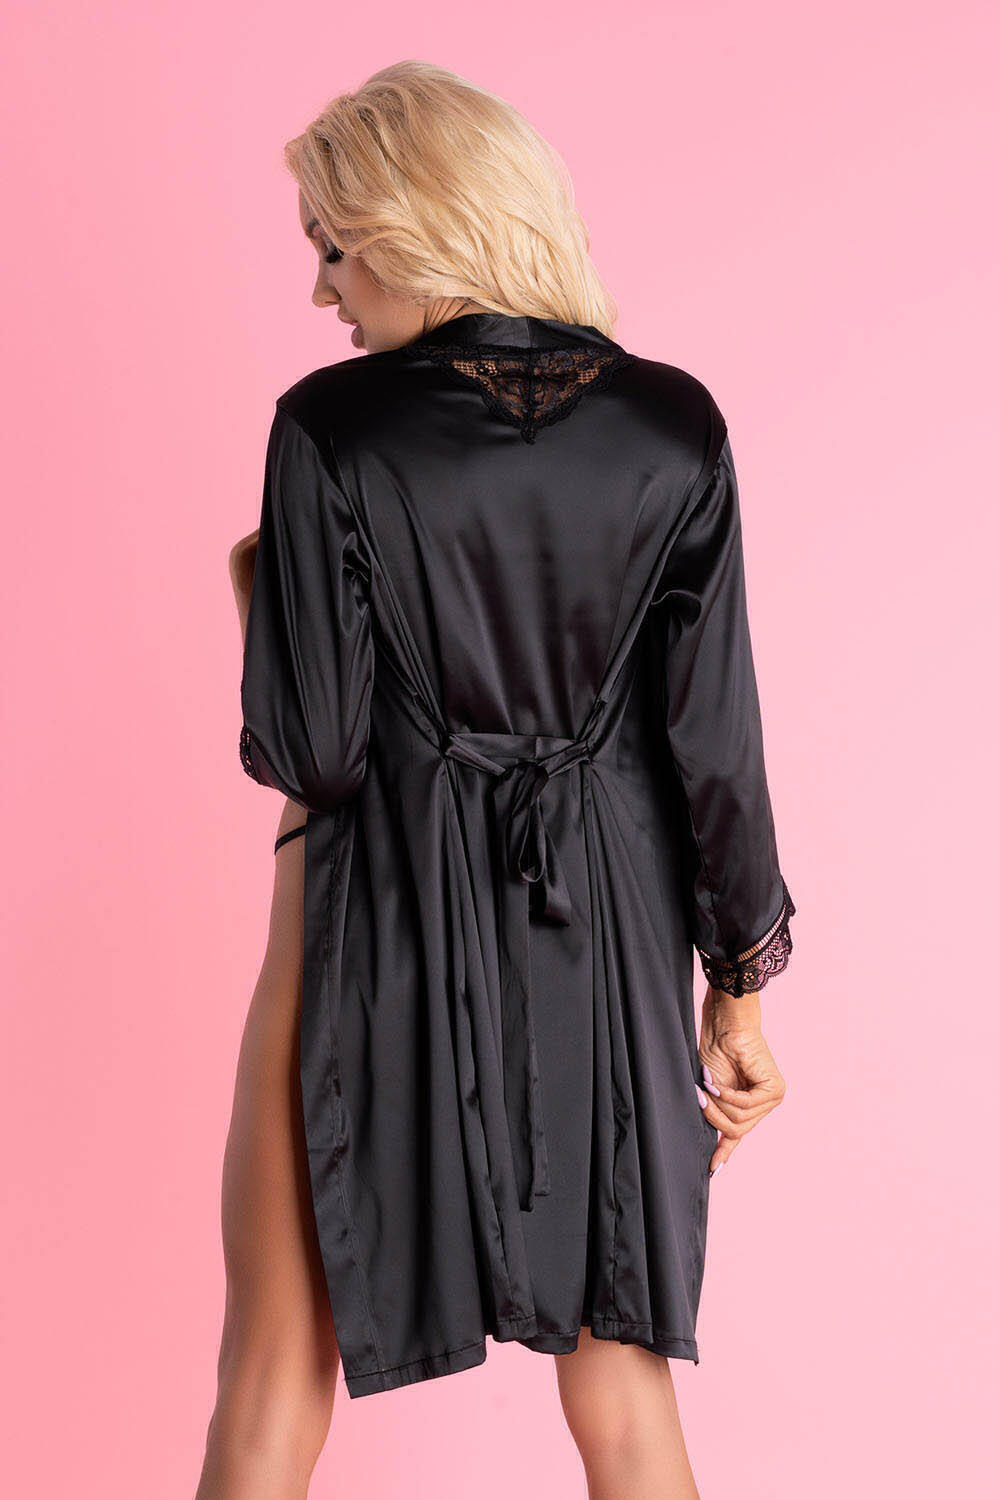 Пеньюары LivCo Corsetti Fashion LC 90568 Ariladyen szlafrok Black, Чёрный, L/XL